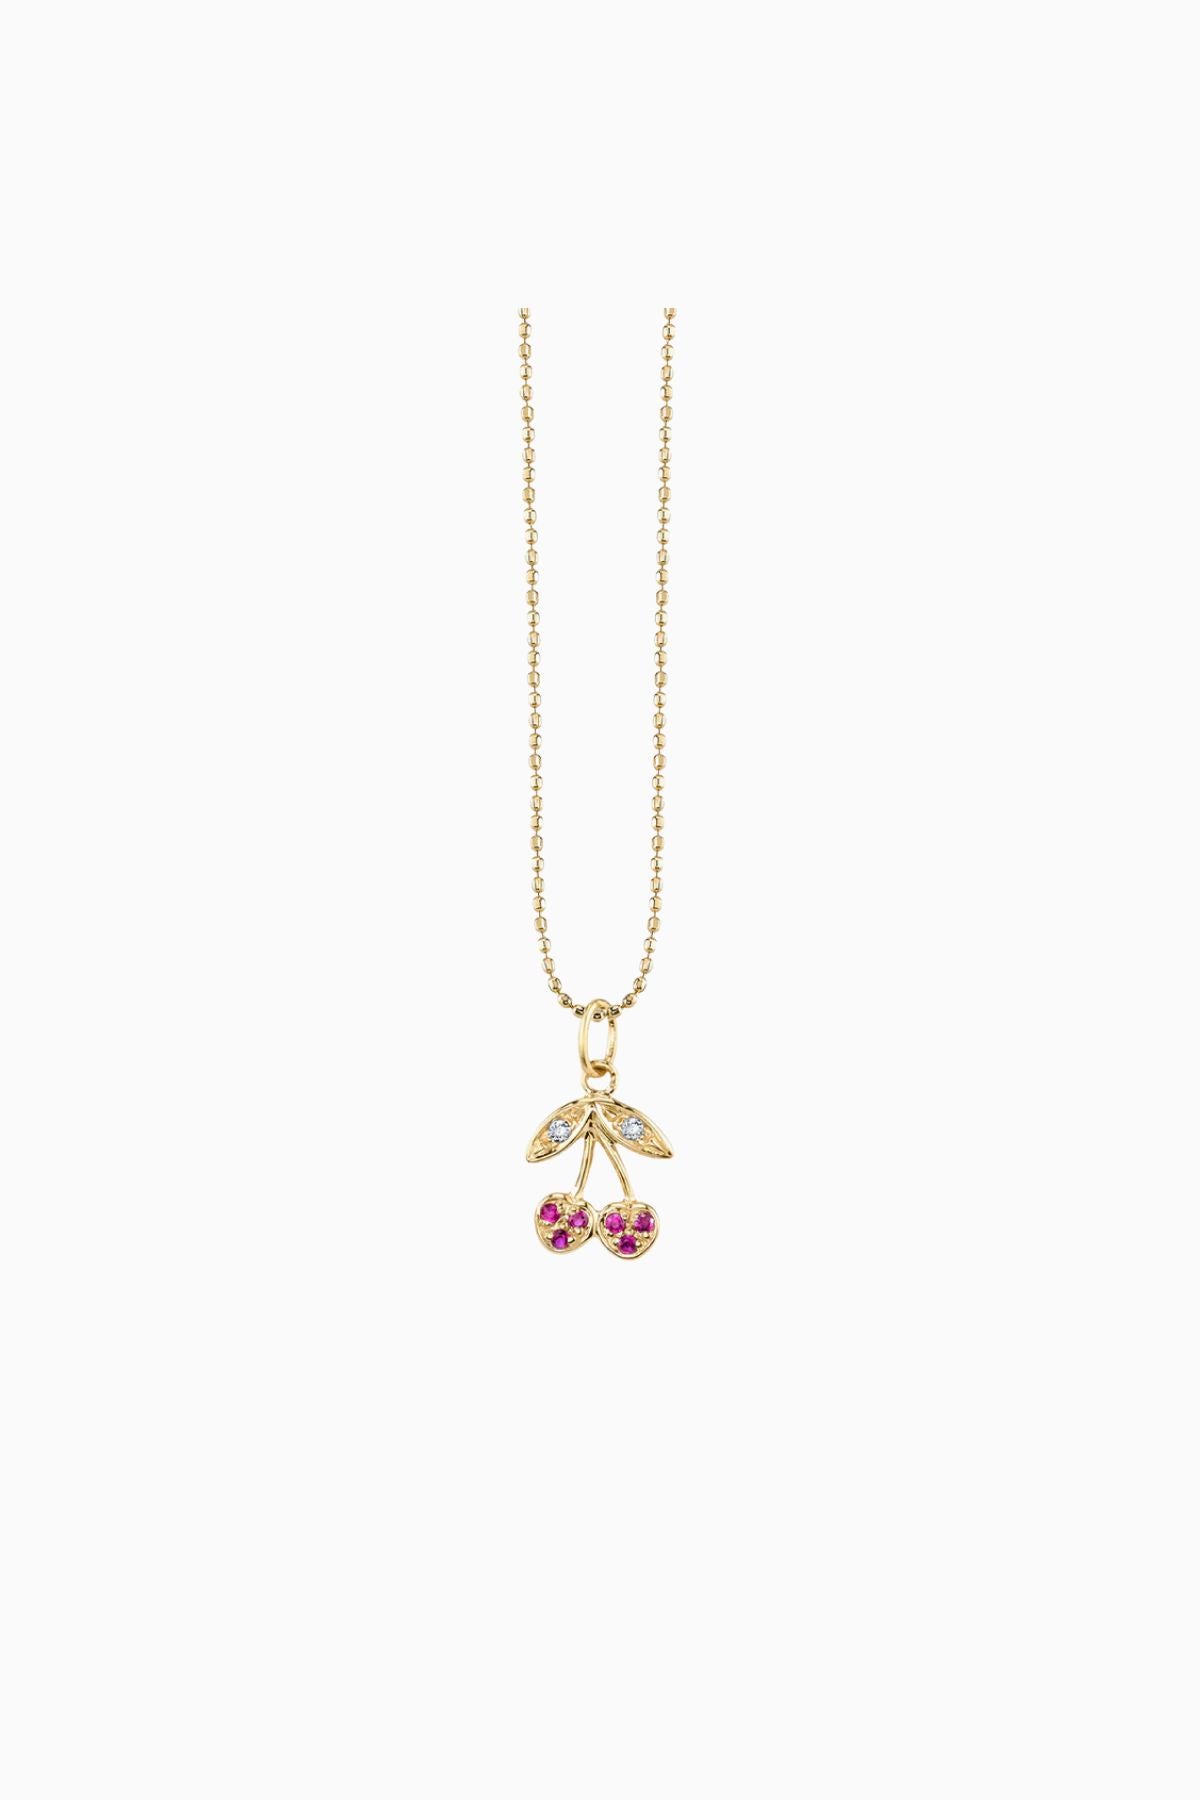 Sydney Evan Tiny Pure Cherry Charm Necklace - Yellow Gold